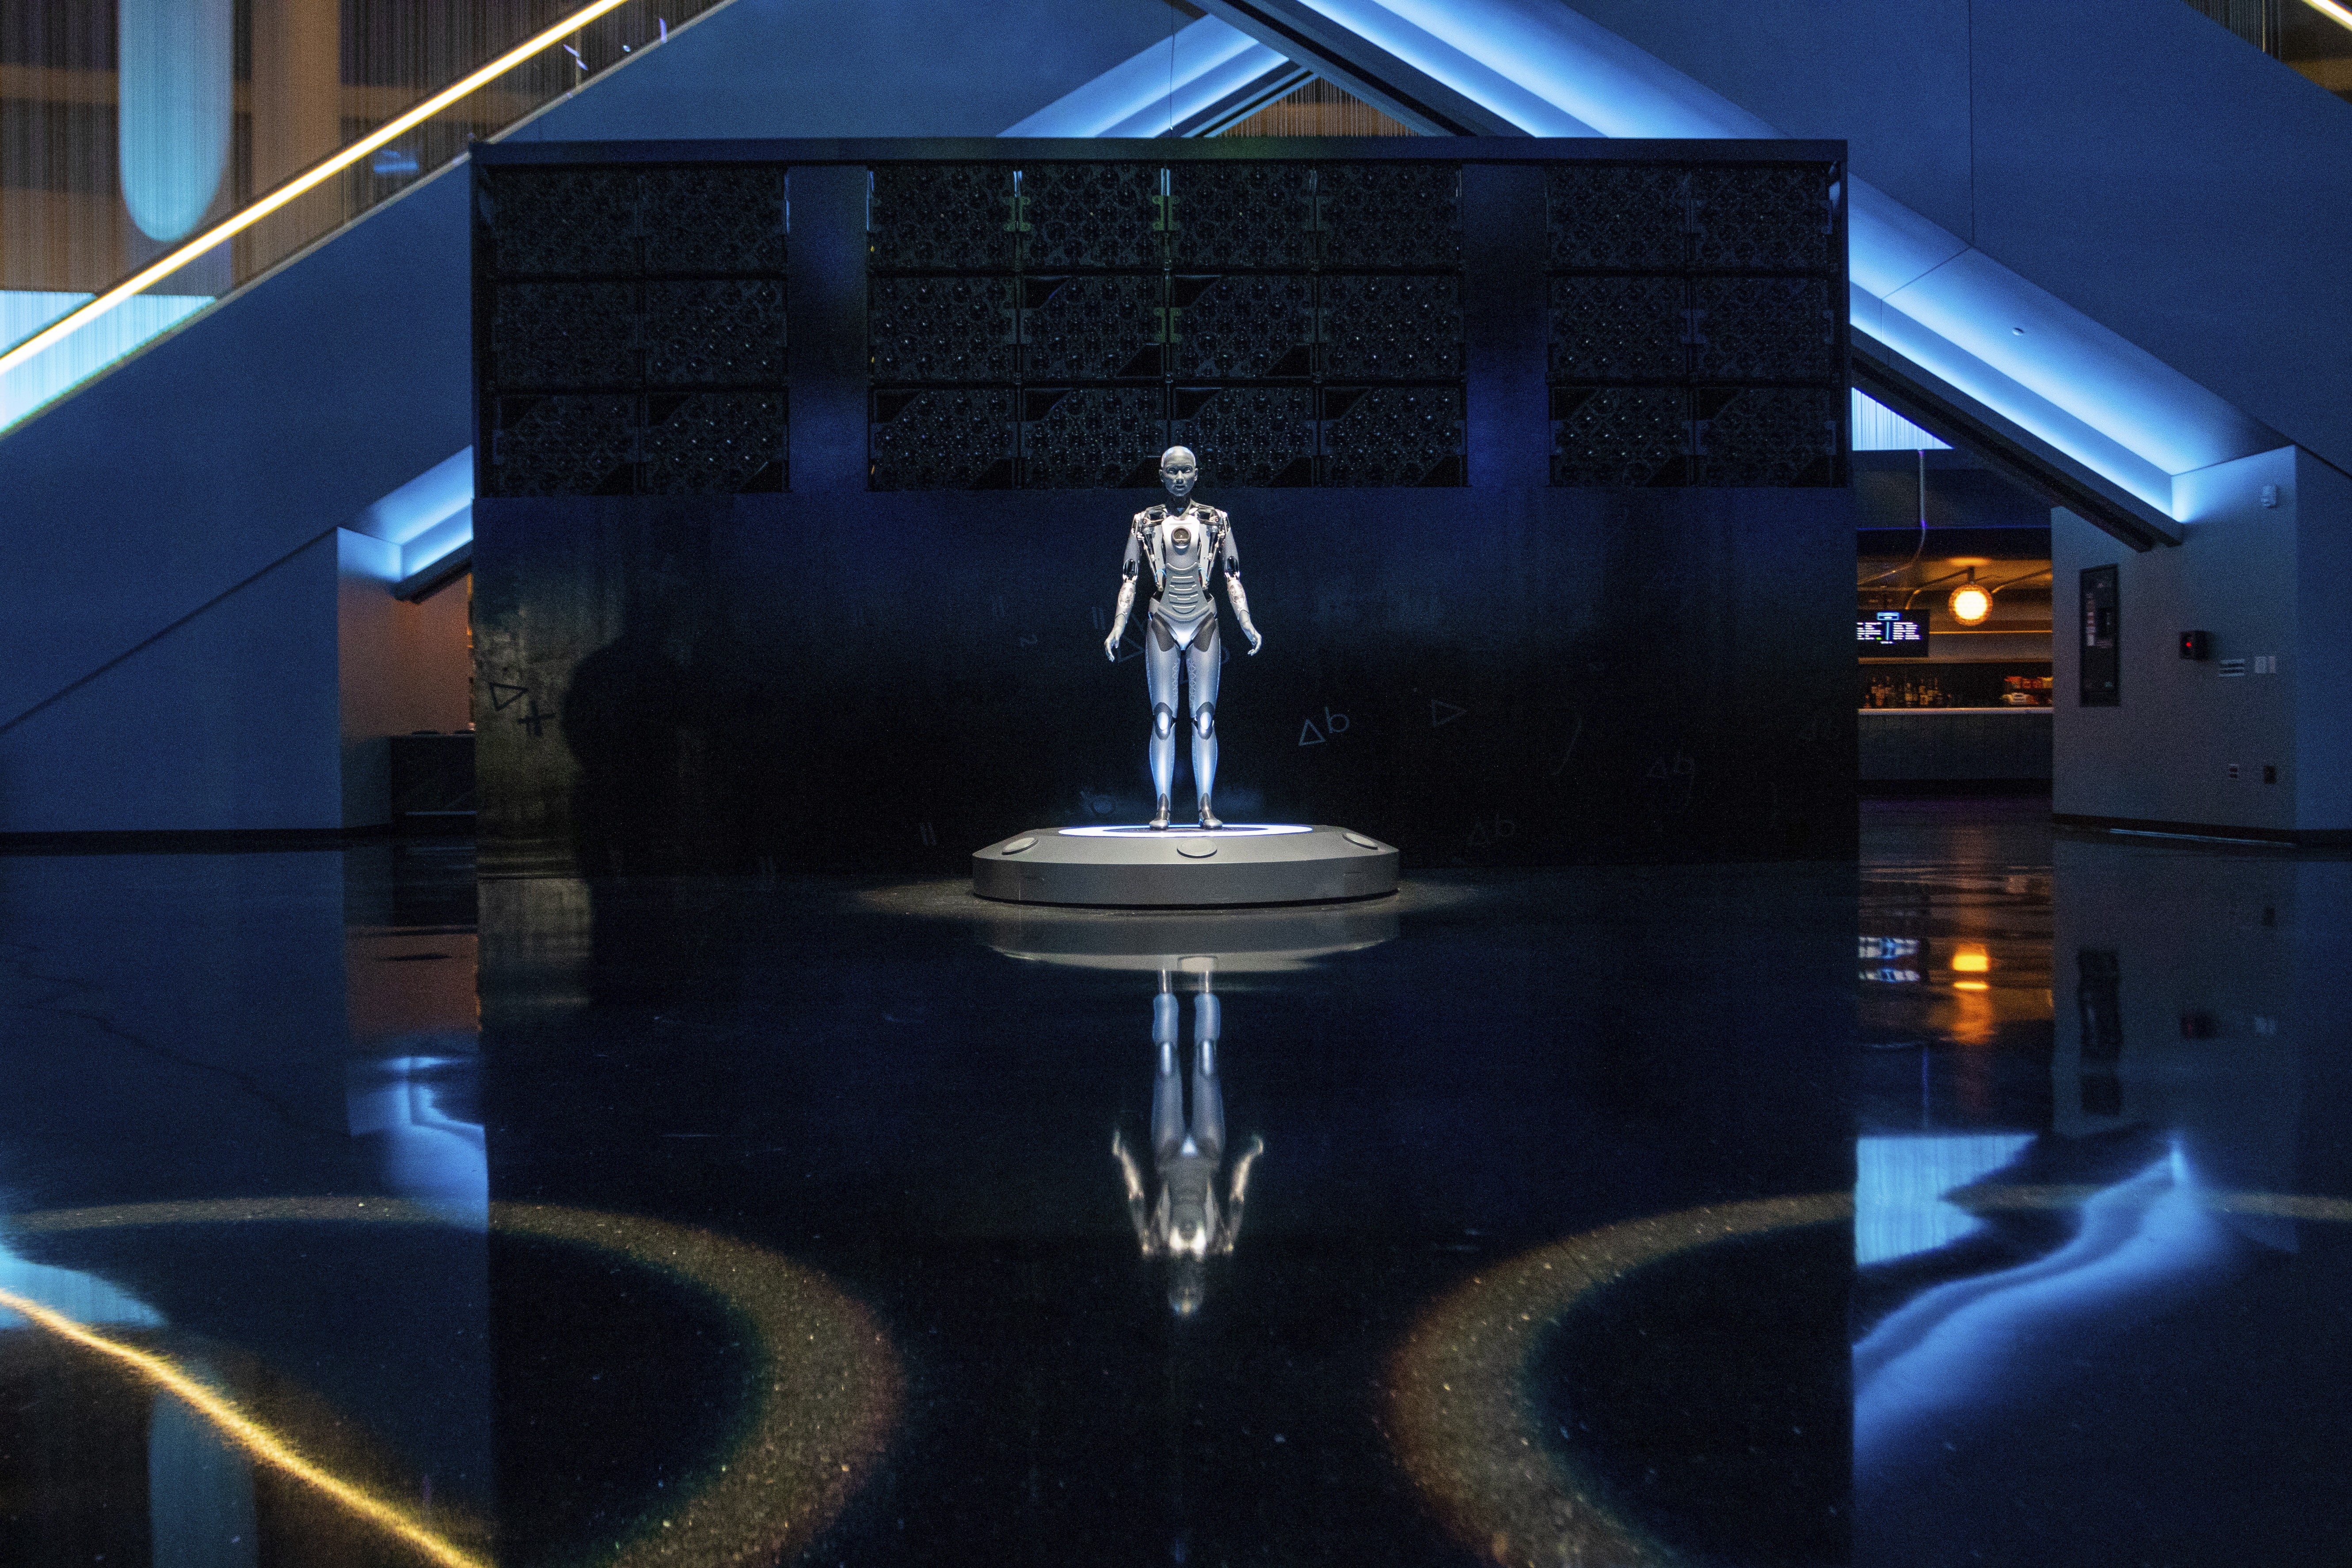 U2 concert uses stunning visuals to open massive Sphere venue in Las Vegas